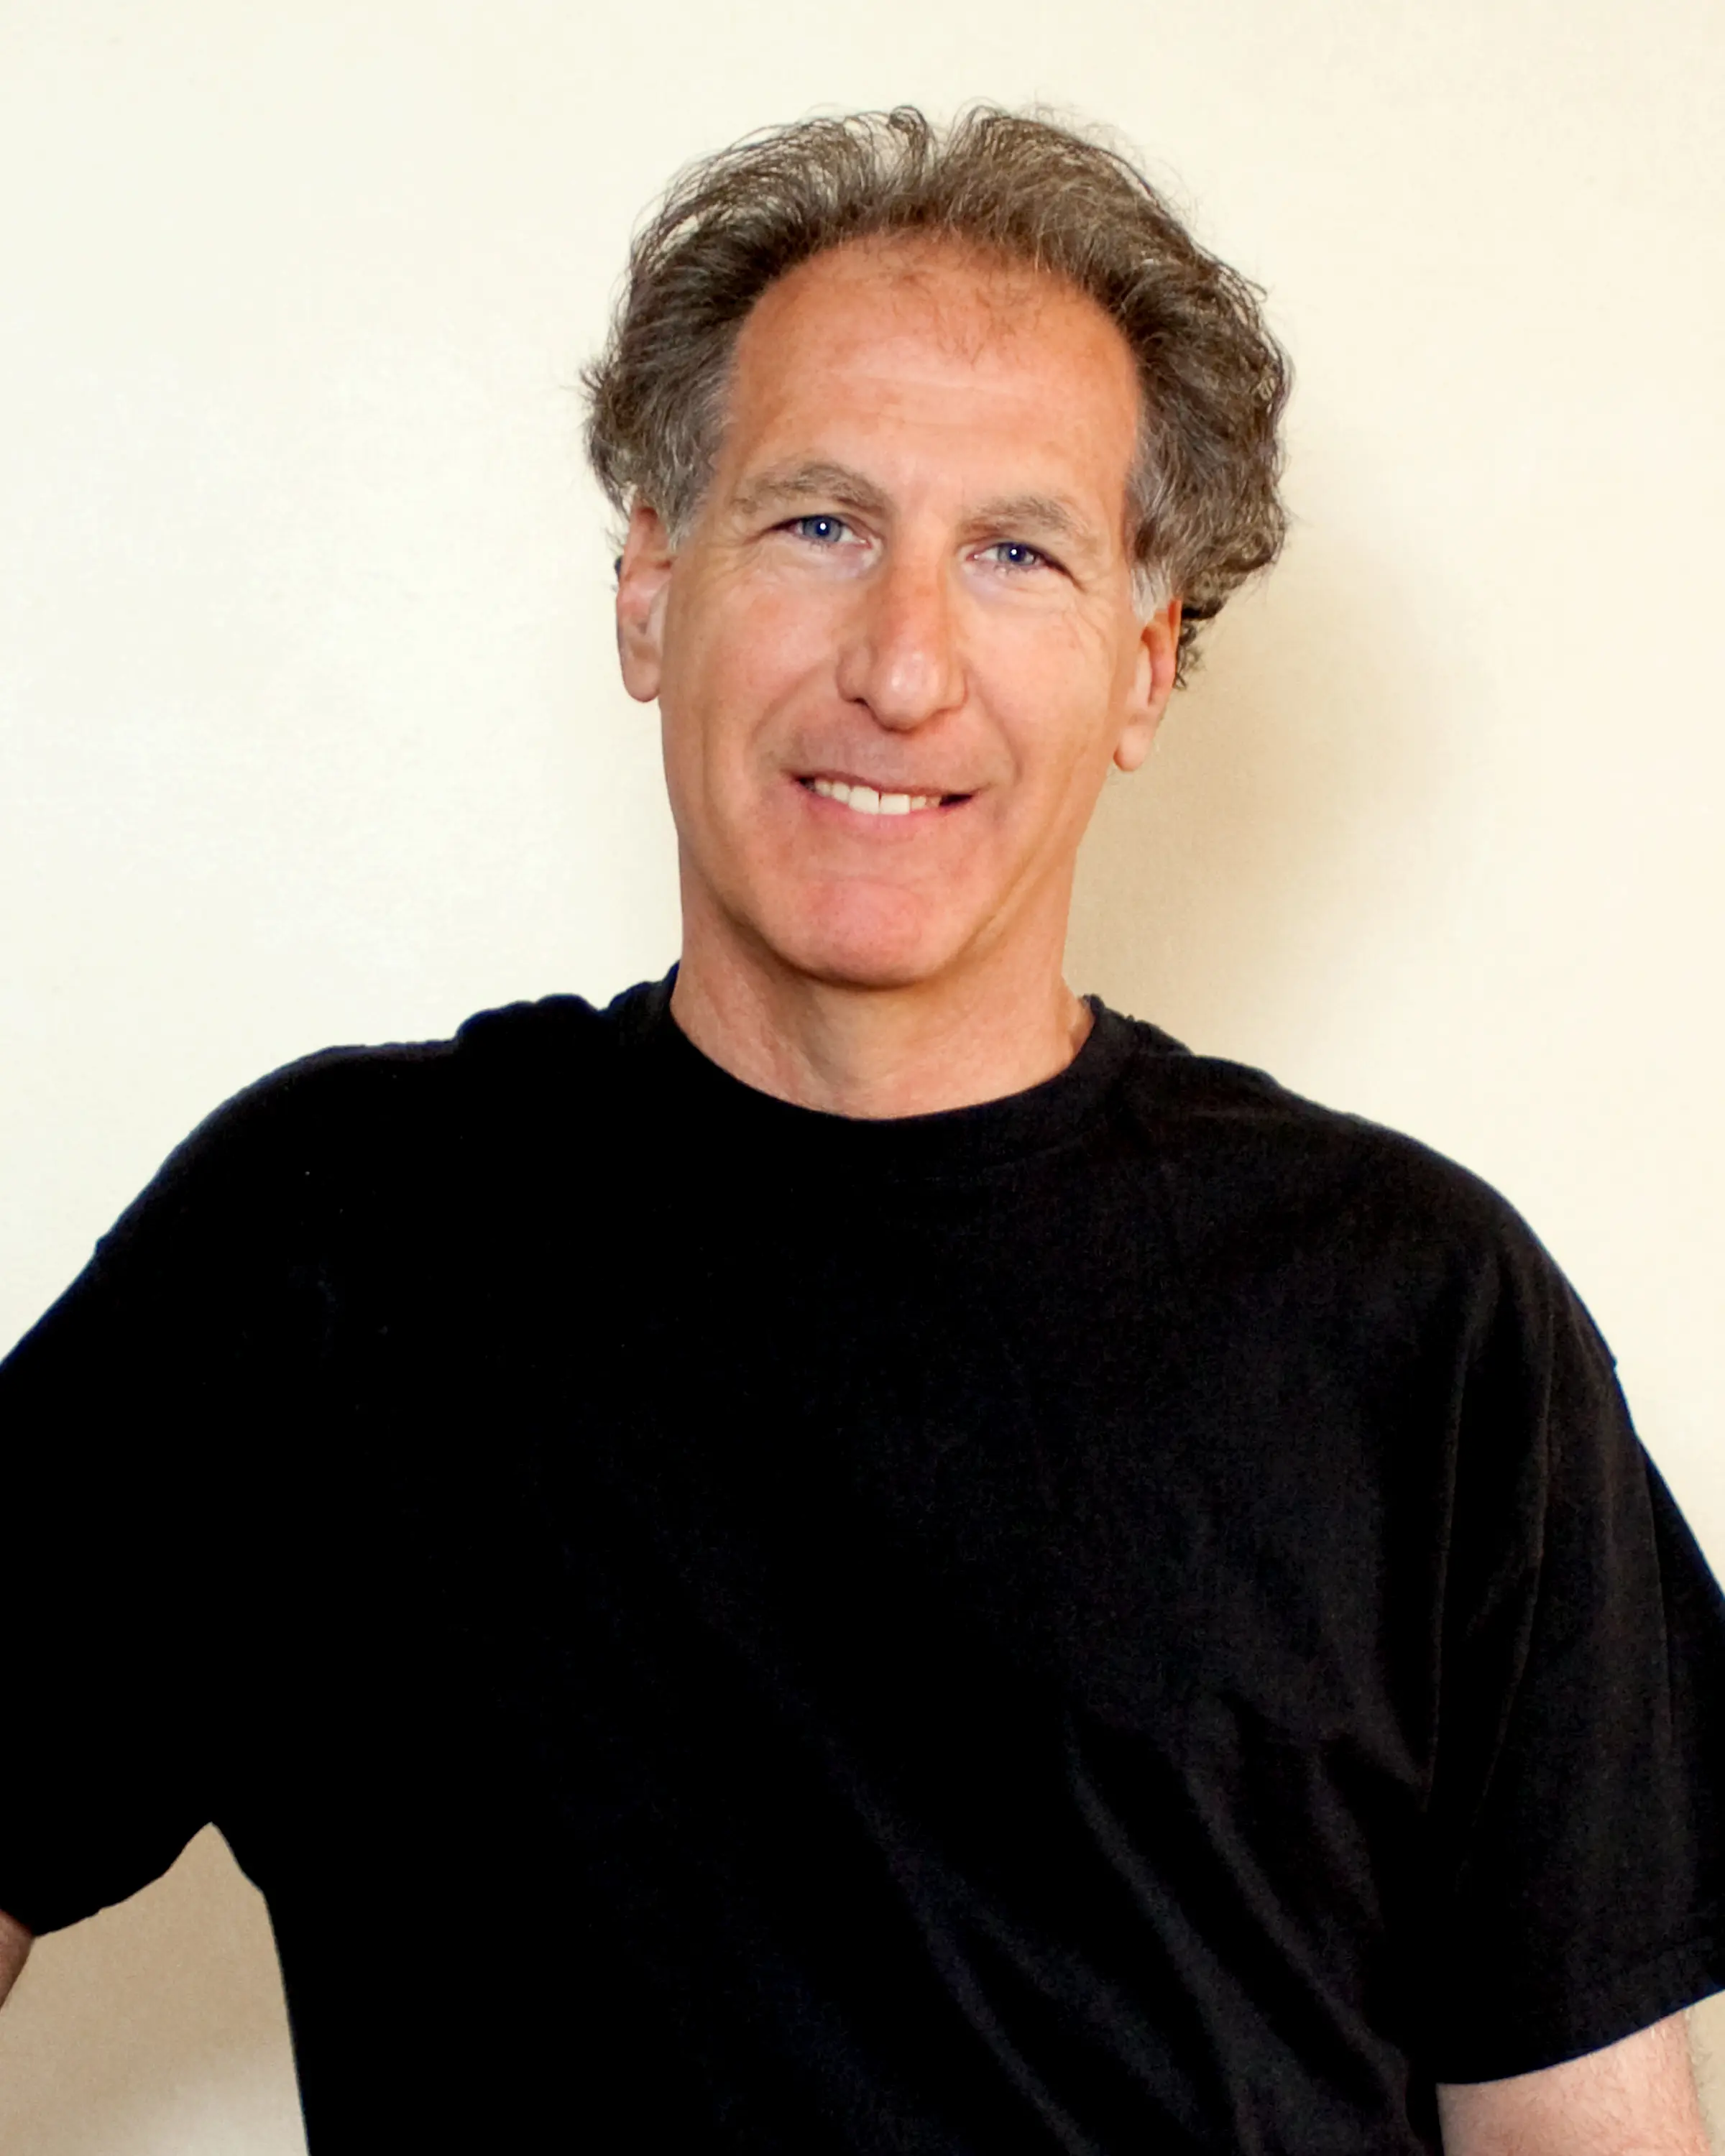 Portrait photo of Steve Feld in black t-shirt and white background